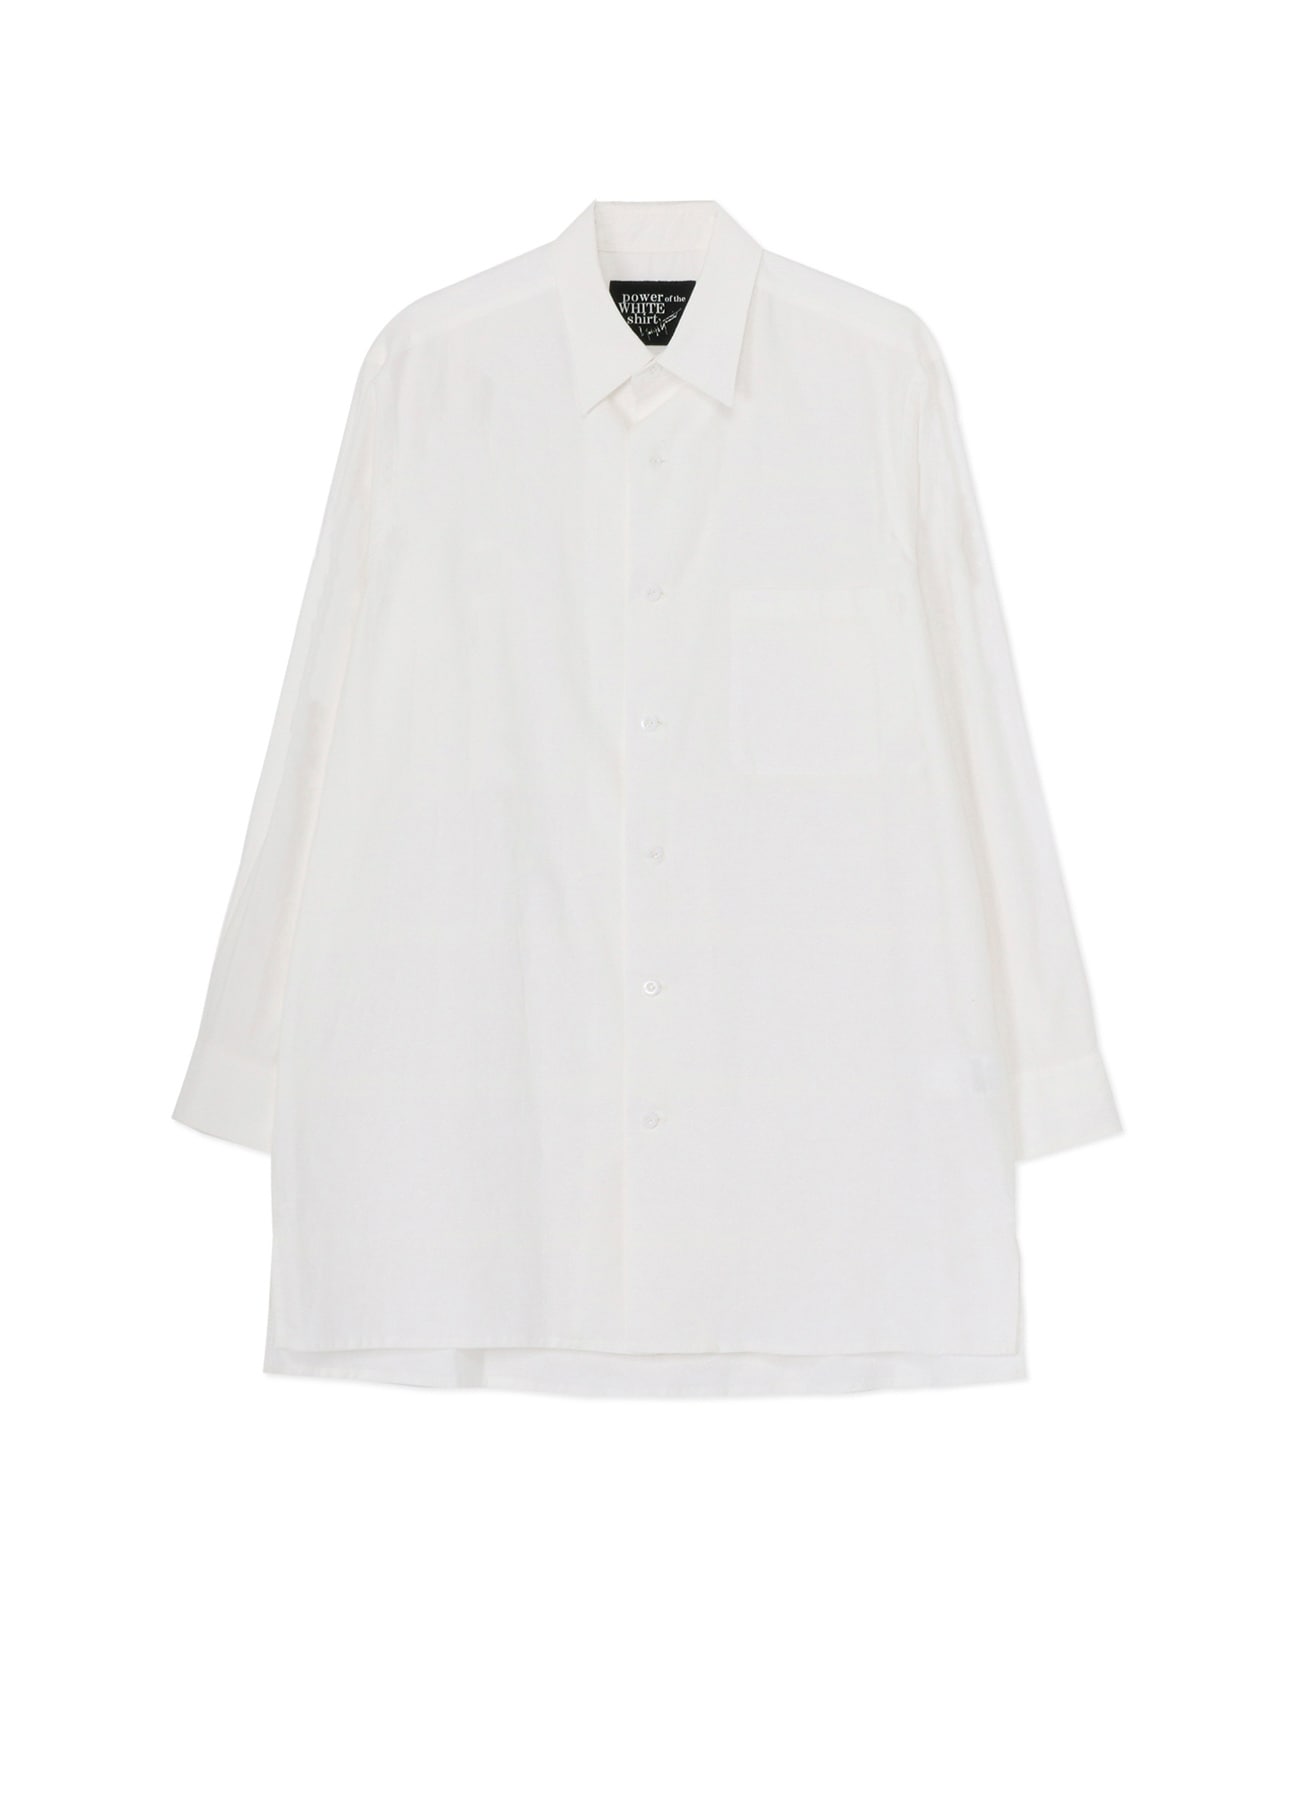 COTTON TWILL CLASSIC BIG SHIRT(S White): power of the WHITE shirt 